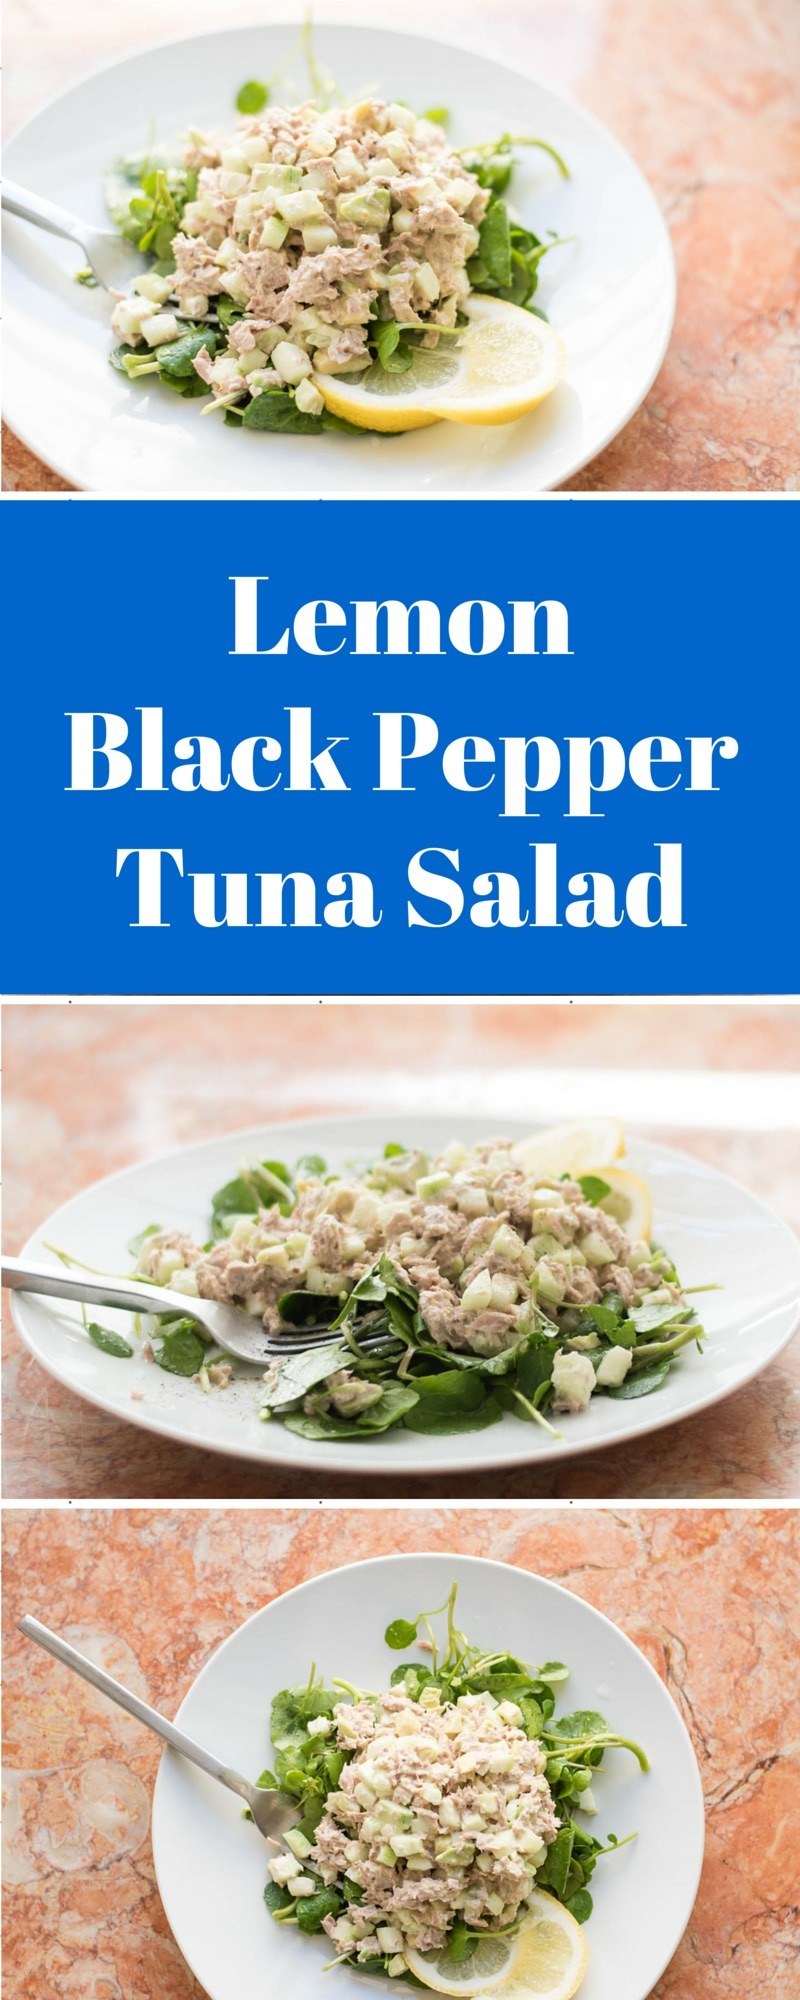 Lemon Black Pepper Tuna Salad #paleo #keto #aip https://paleoflourish.com/lemon-black-pepper-tuna-salad-keto-paleo-aip